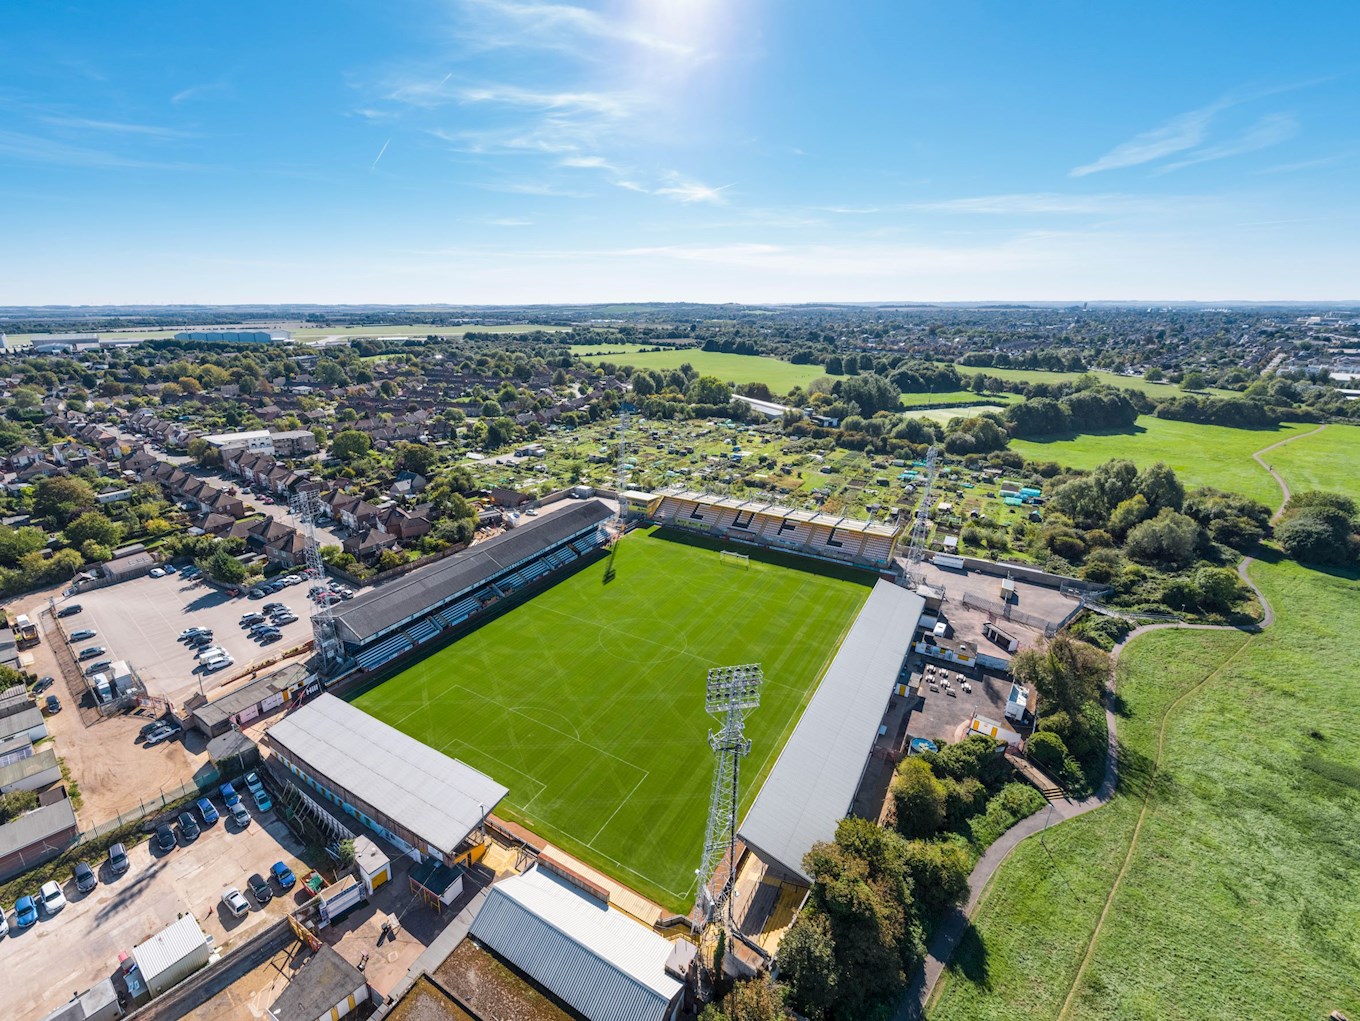 Aerial view of the Cledara Abbey Stadium